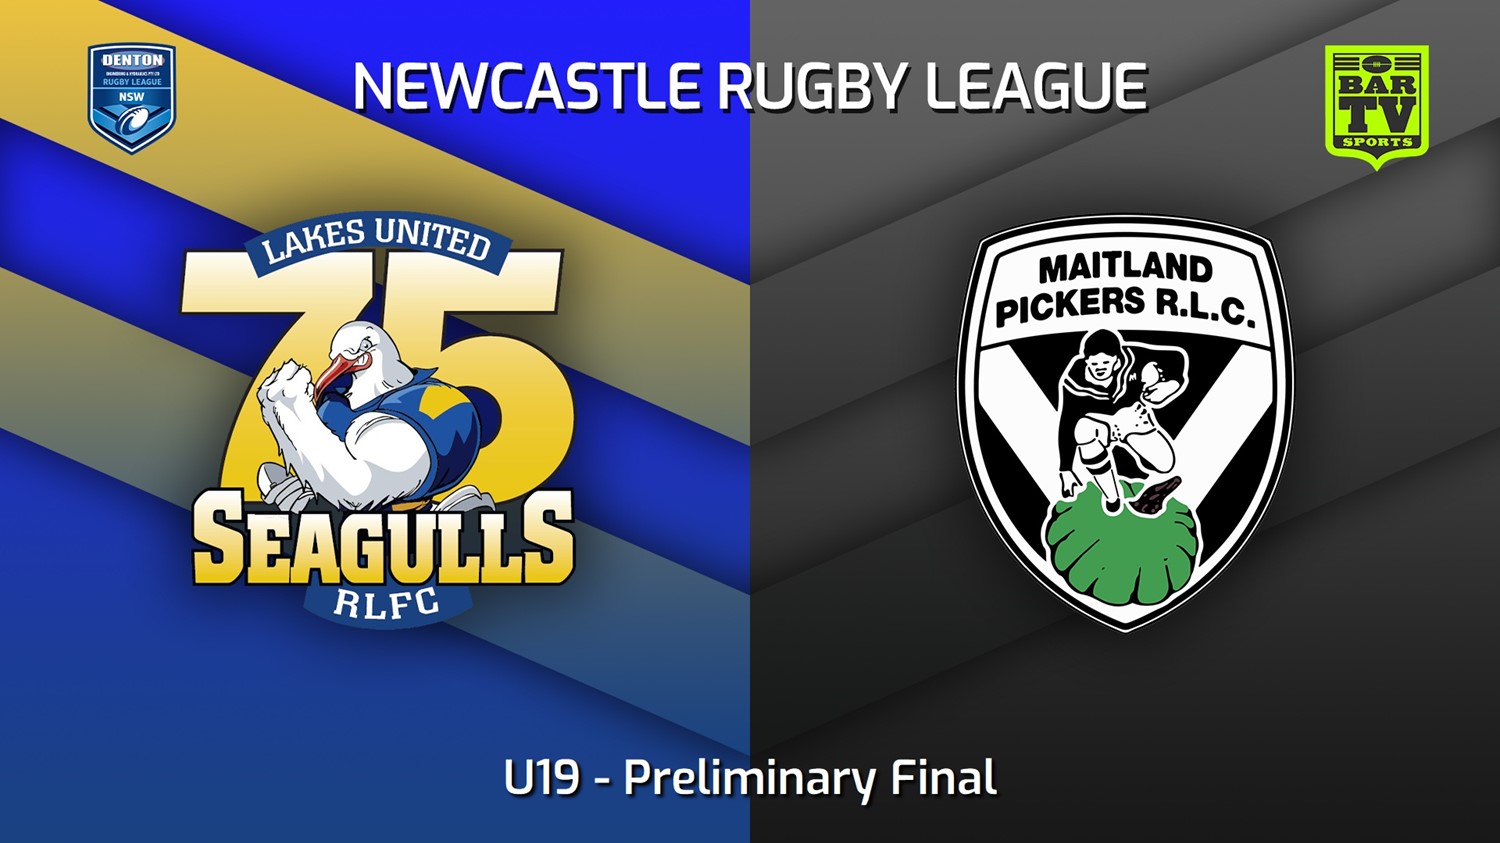 220903-Newcastle Preliminary Final - U19 - Lakes United v Maitland Pickers Slate Image